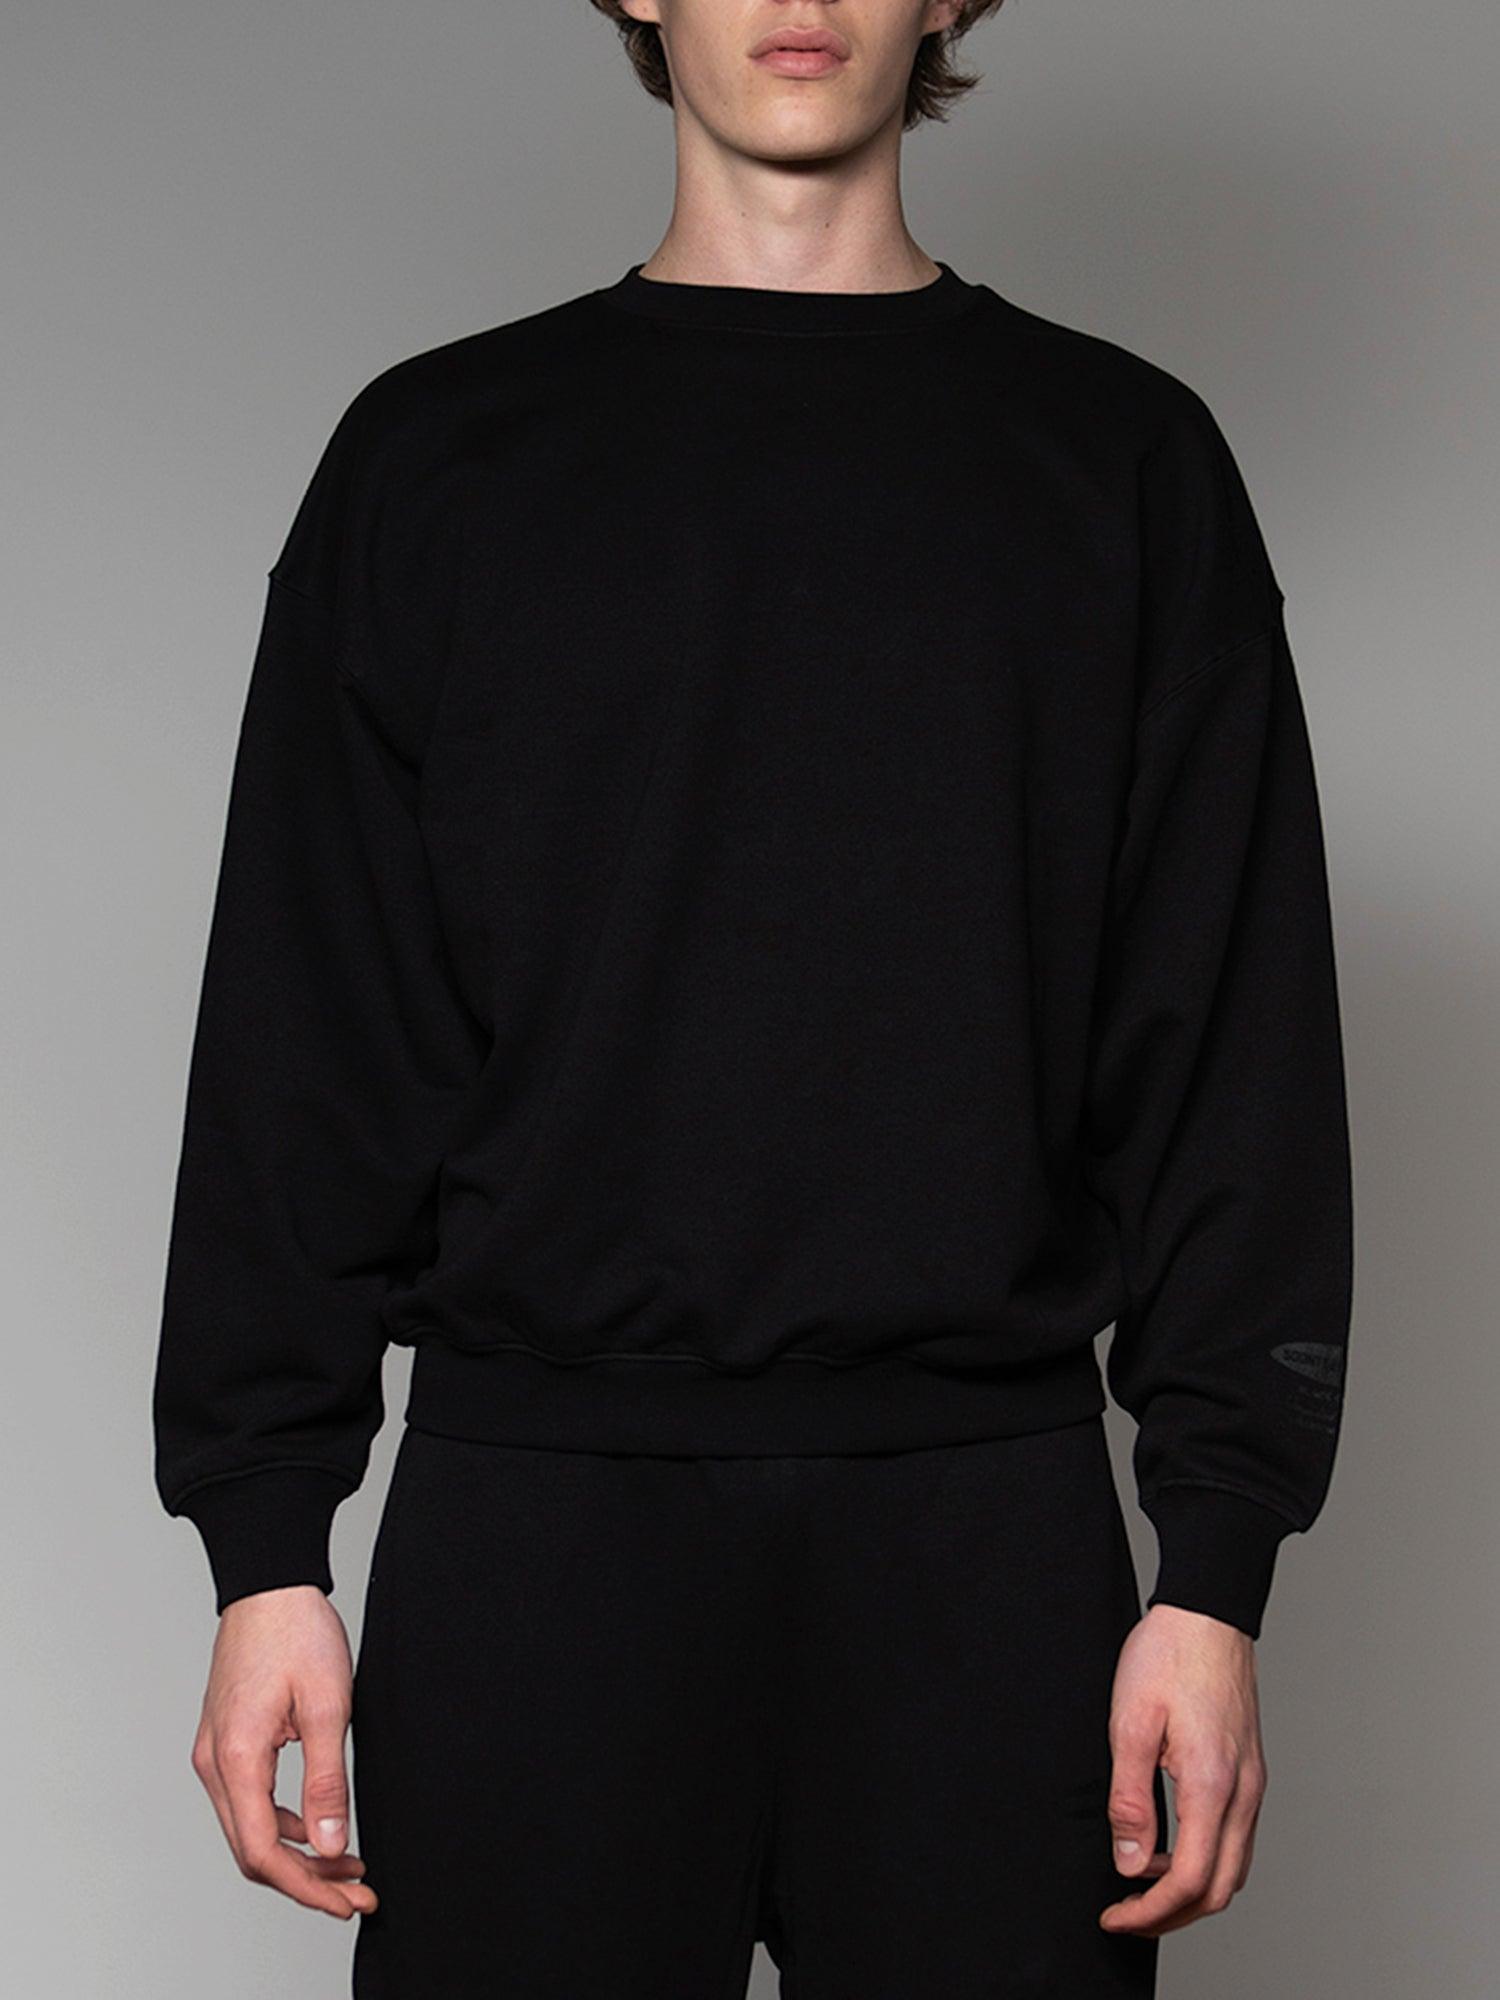 Black on Black Sweatshirt - SOON TO BE ANNOUNCED